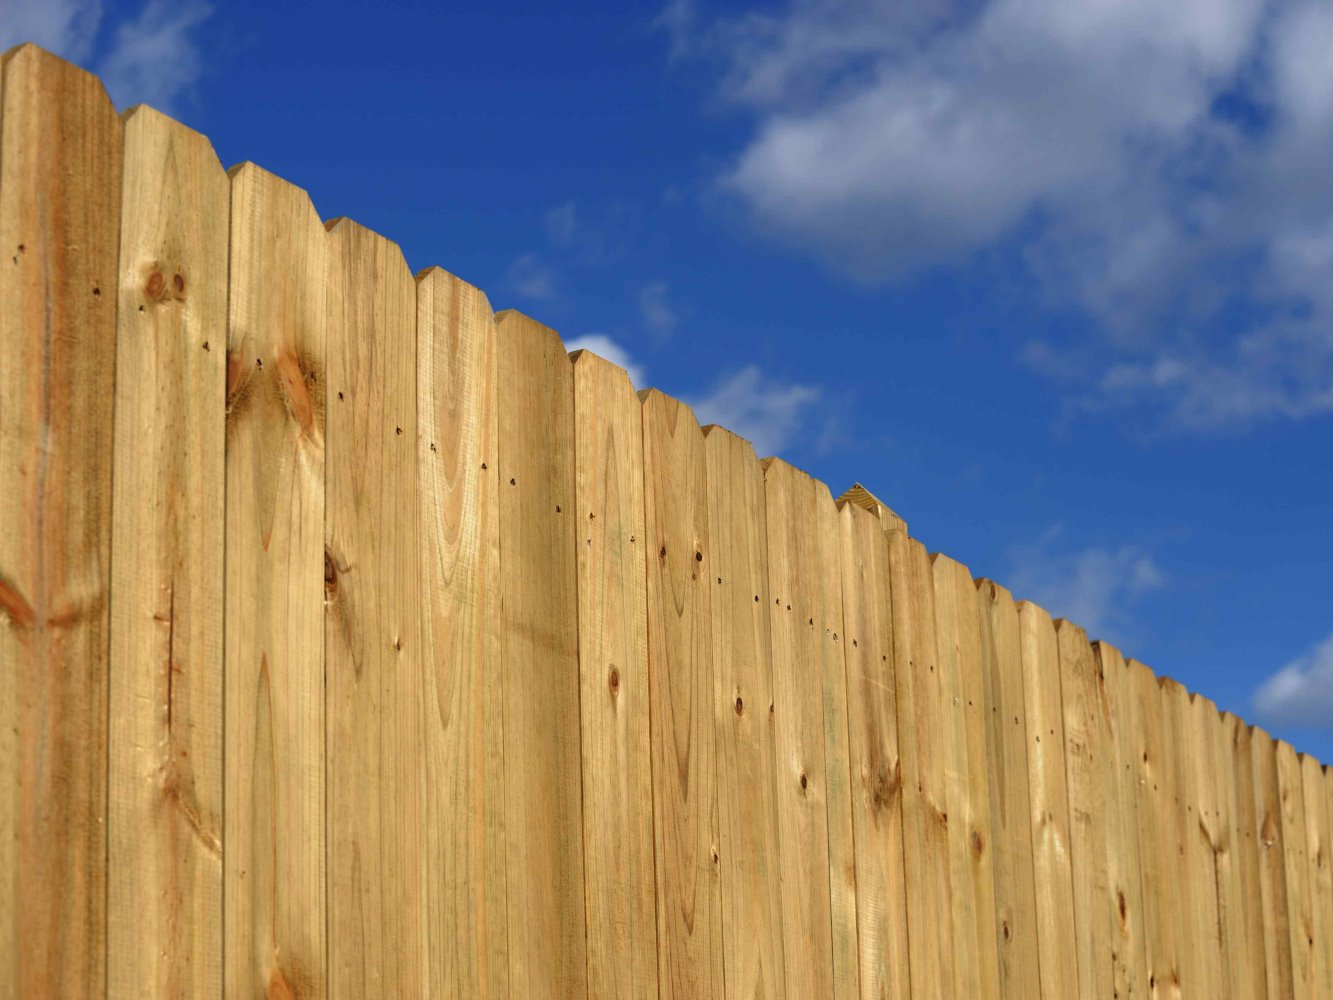 St. George SC stockade style wood fence